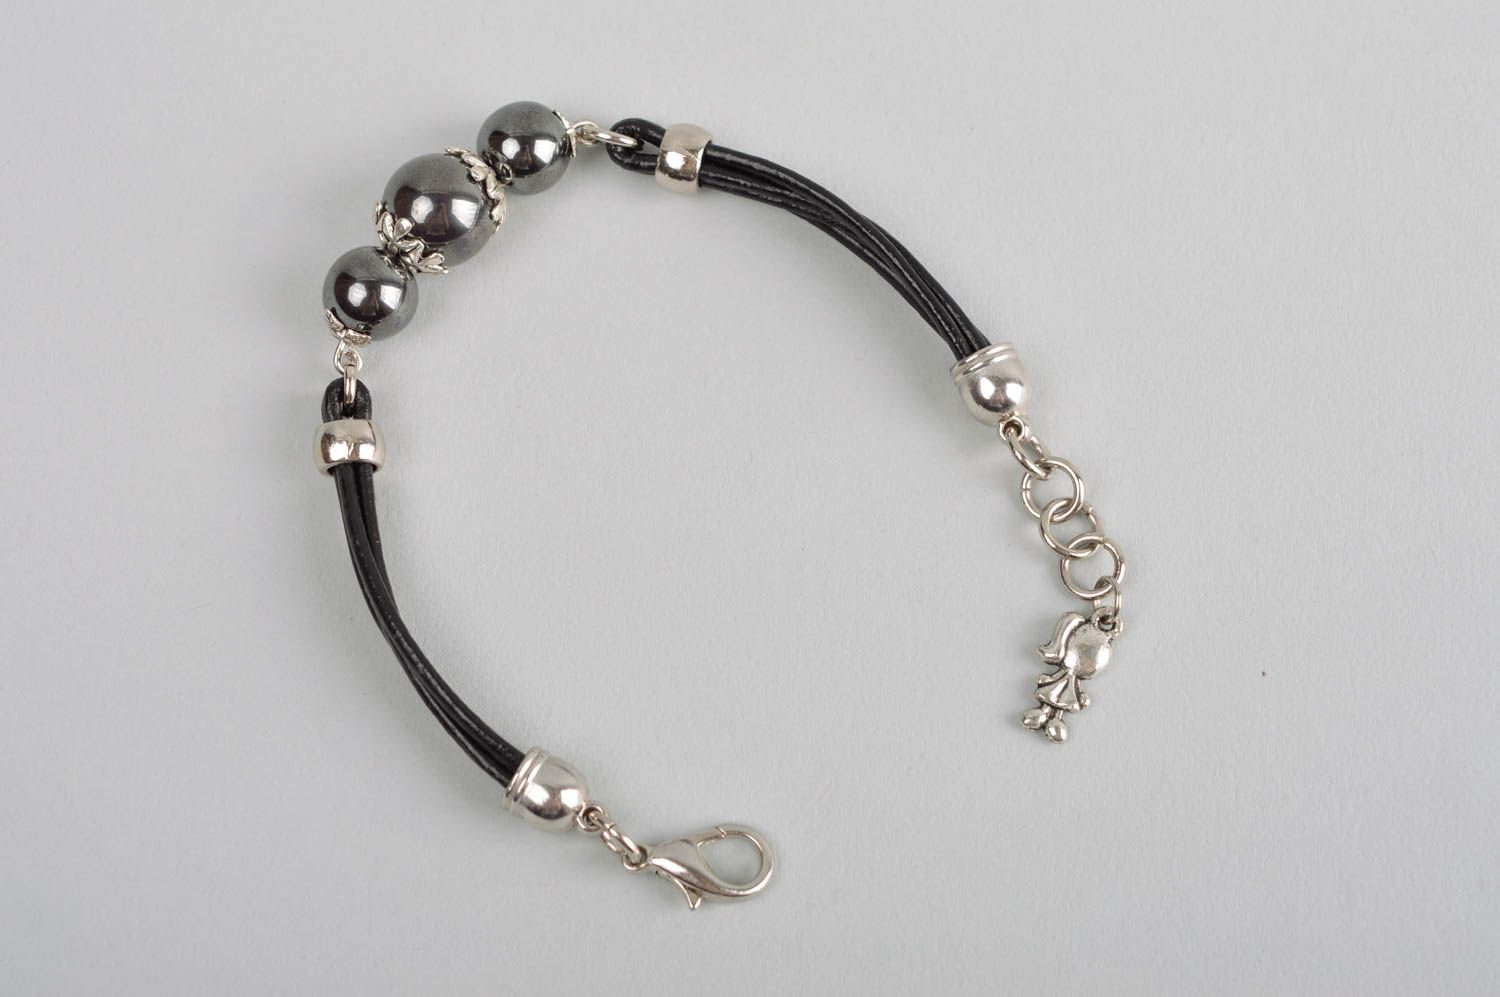 Unusual handmade gemstone bracelet leather bracelet designs gifts for her photo 5